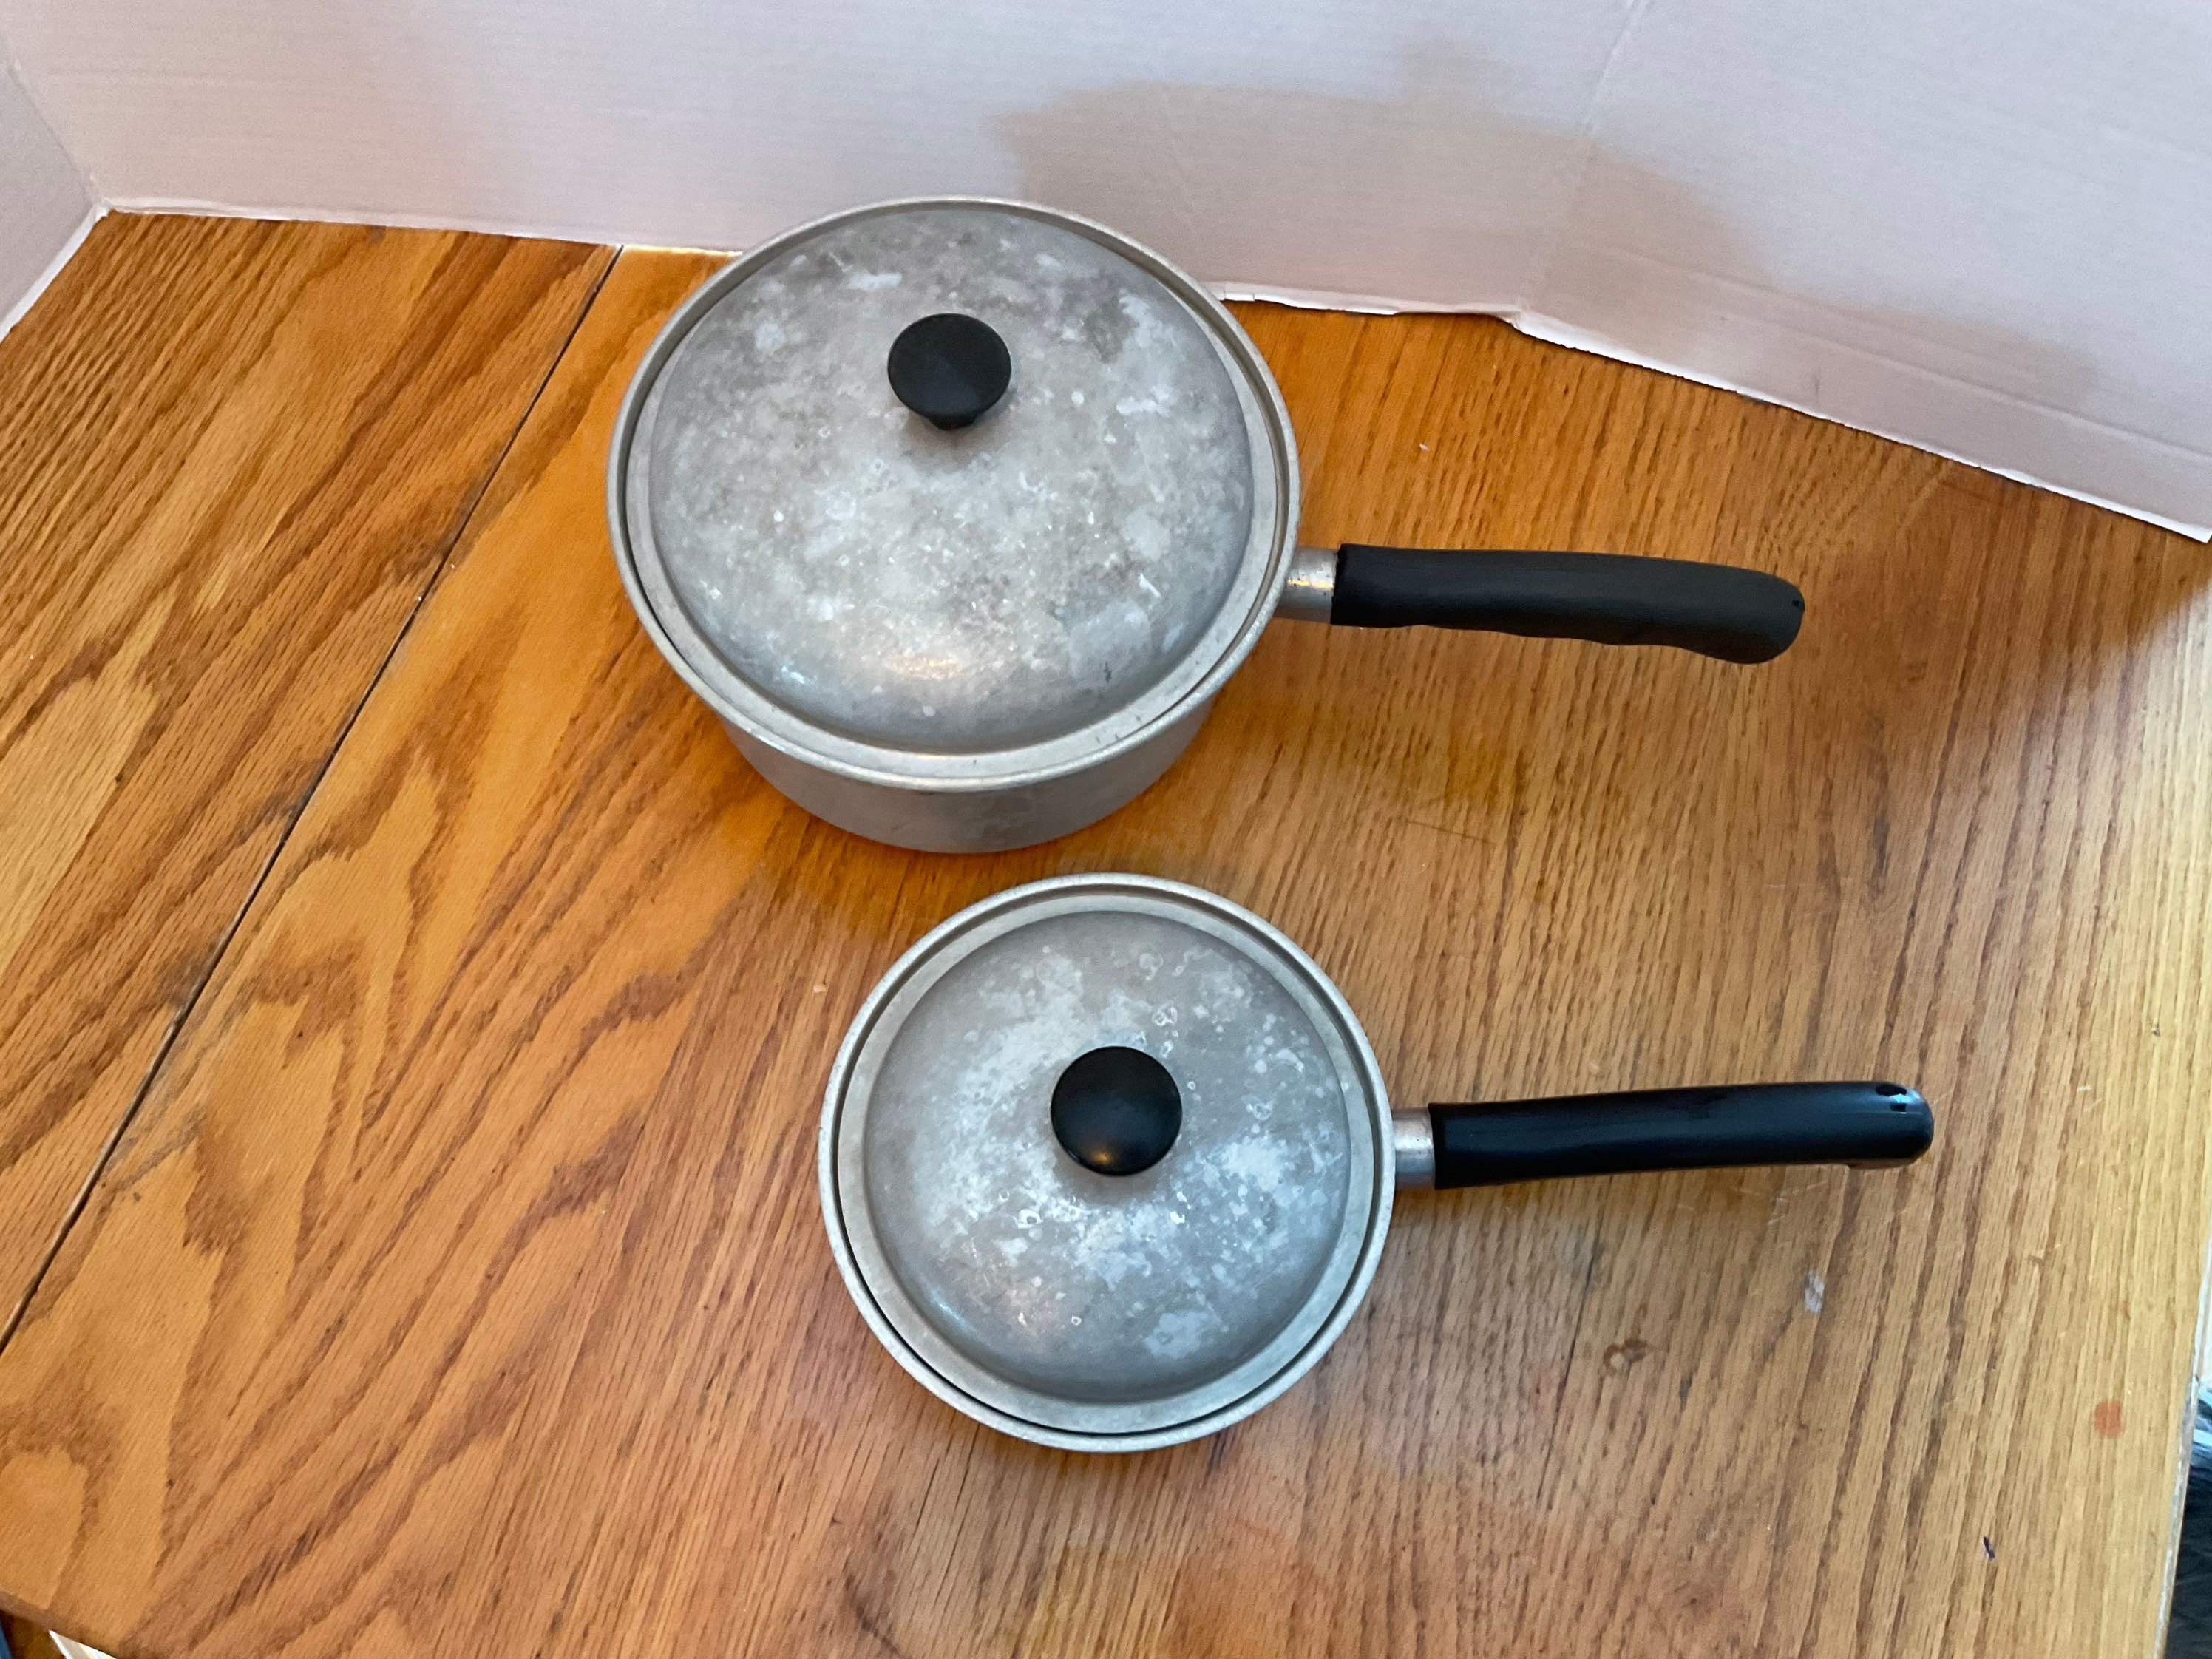 Vita Craft 12 Quart Stainless Steel Pot — Bargaineer